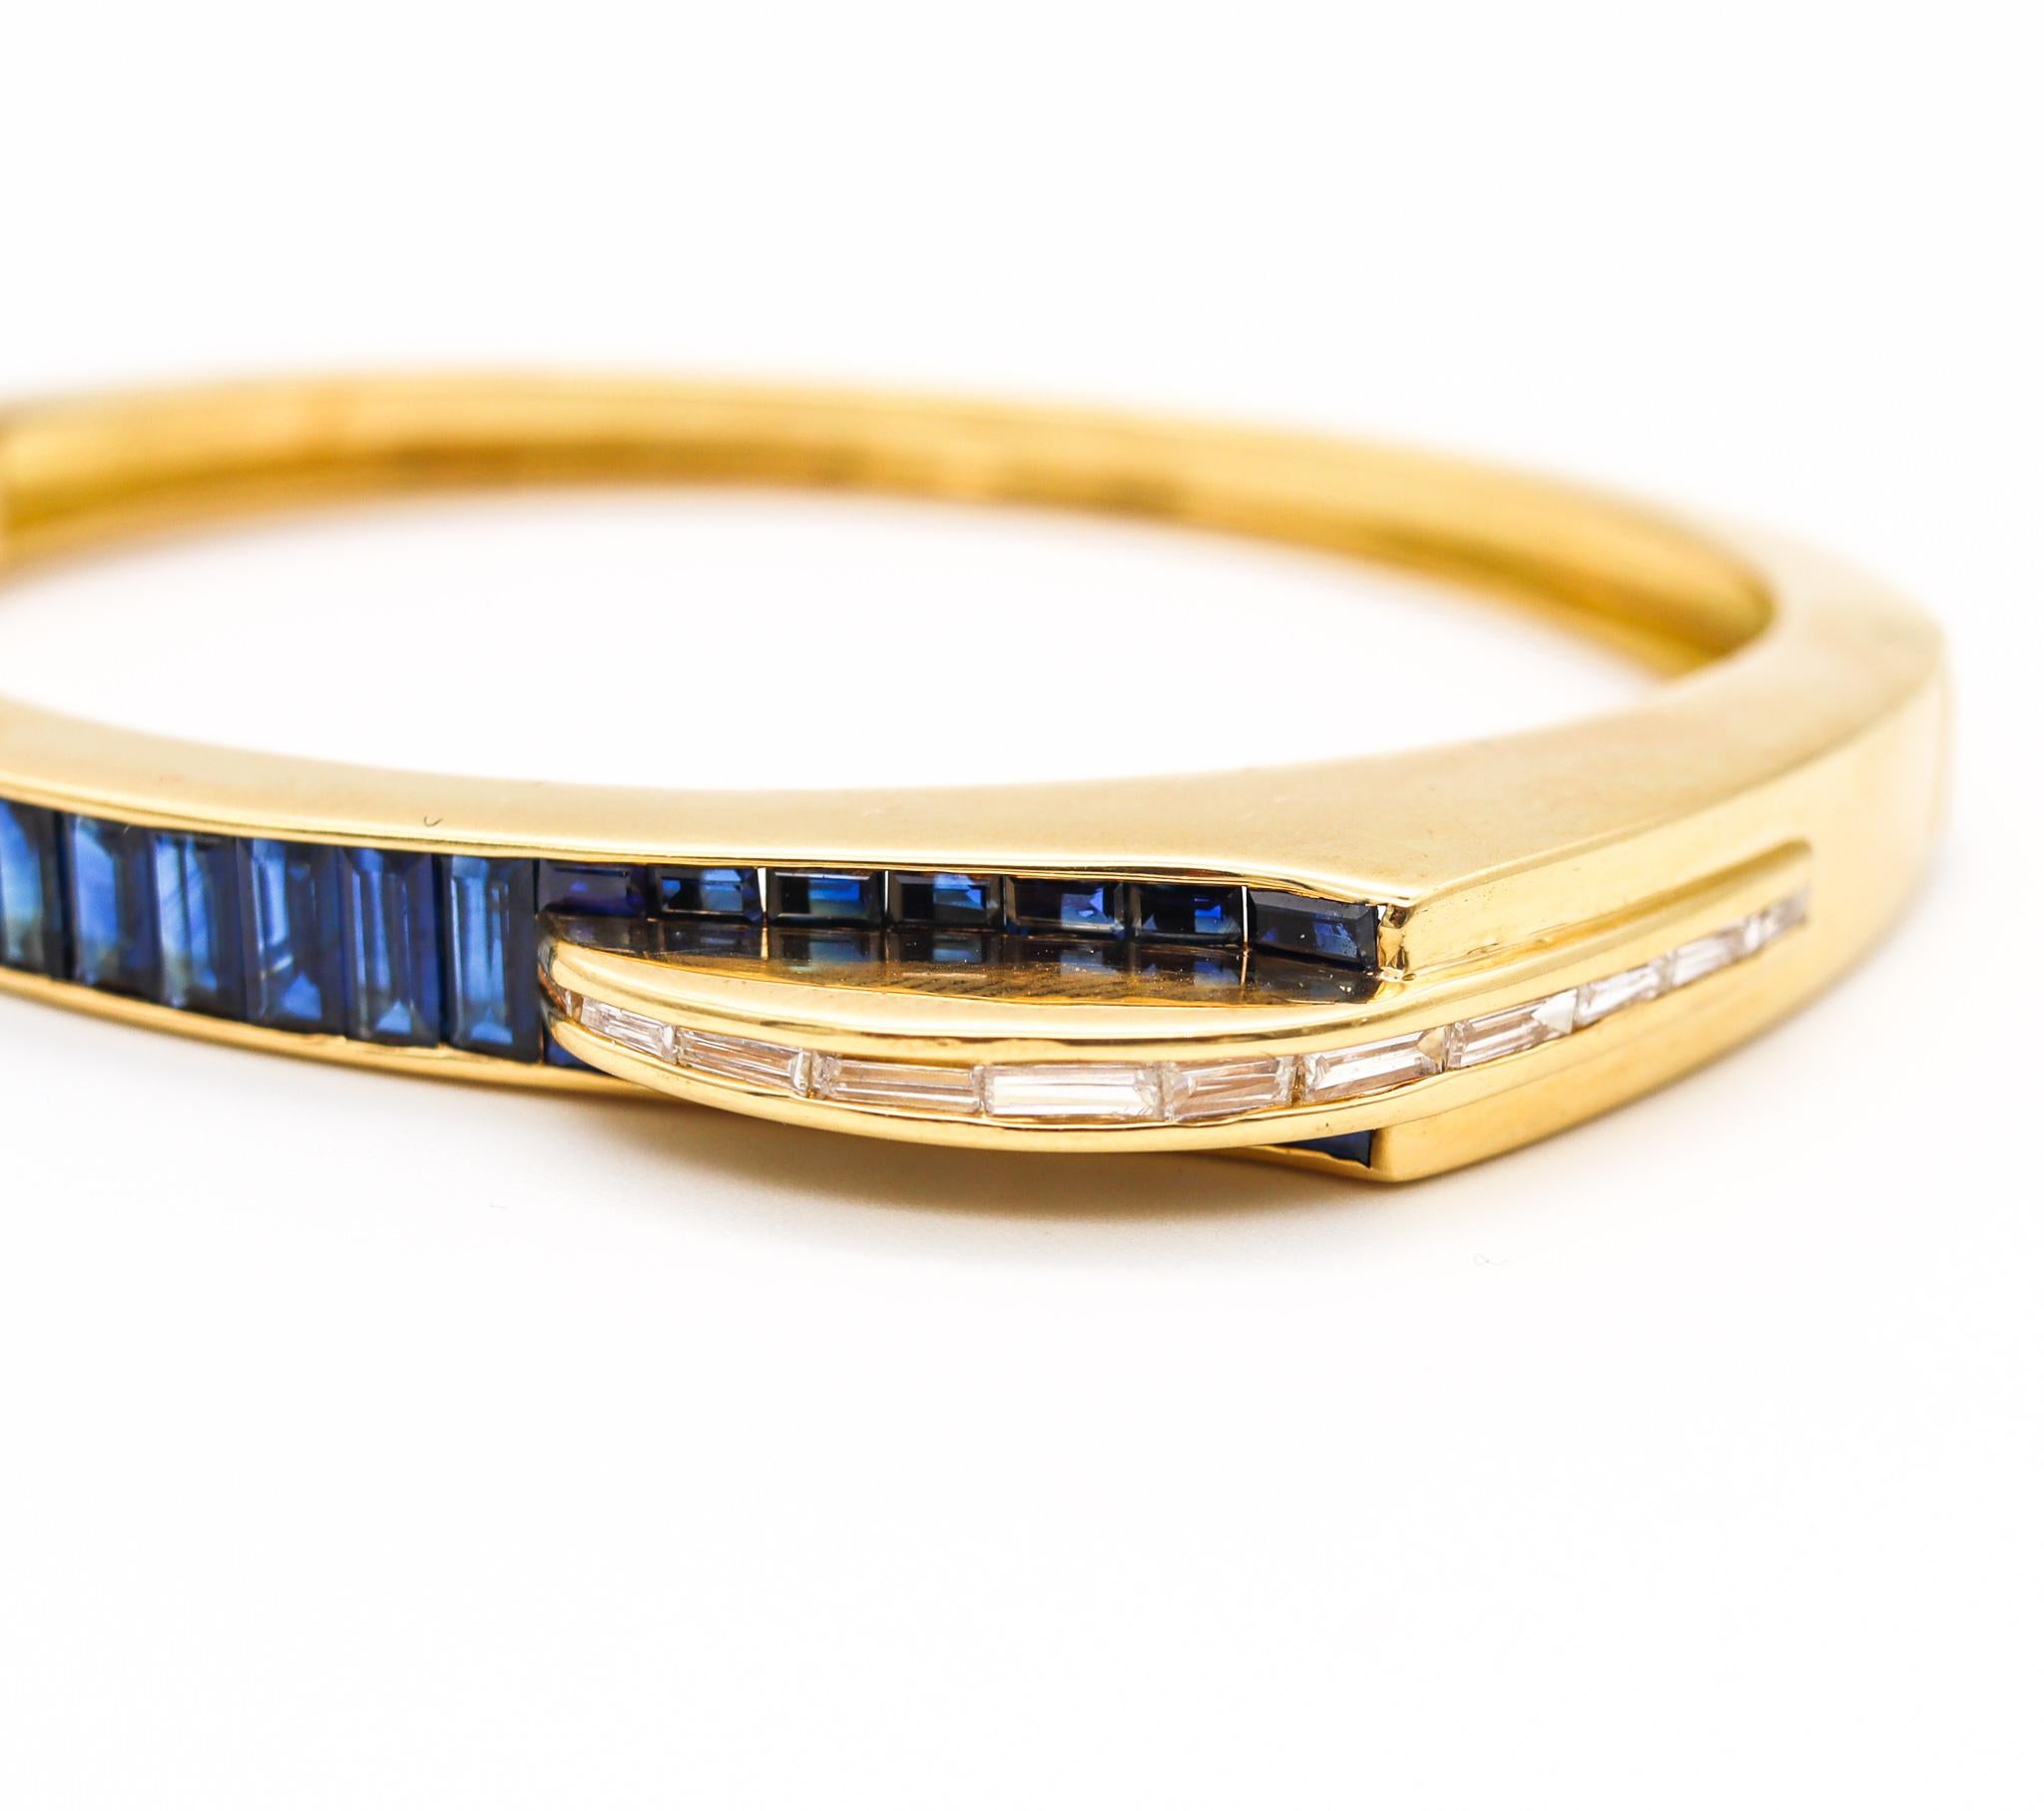 Gubelin Swiss 1970 Geometric Modernist Bracelet in 18Kt Gold 8.71 Cts Gemstones 4